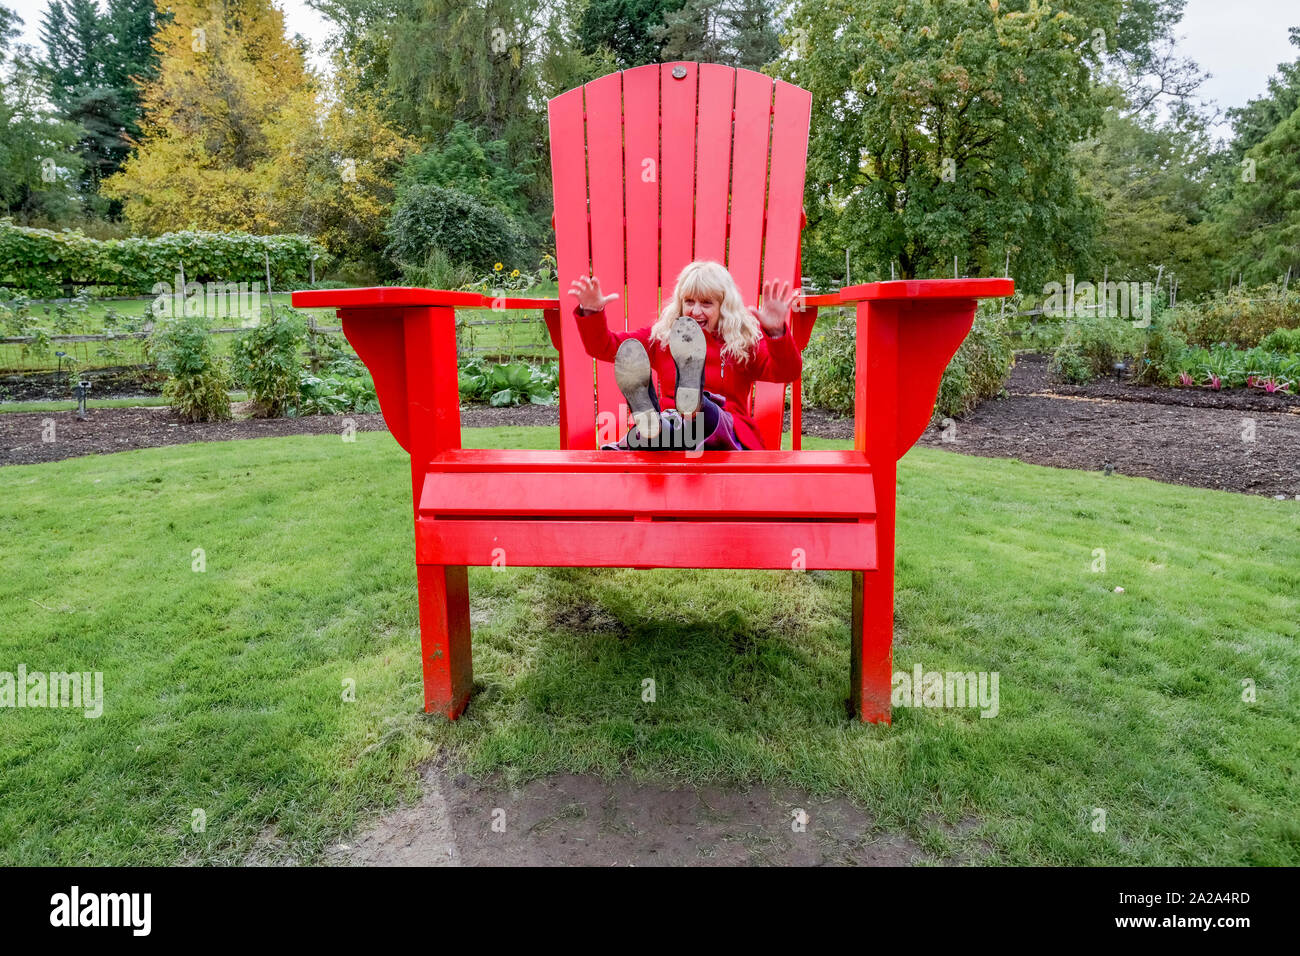 Man Sitting in Giant Adirondack Chair Stock Photo